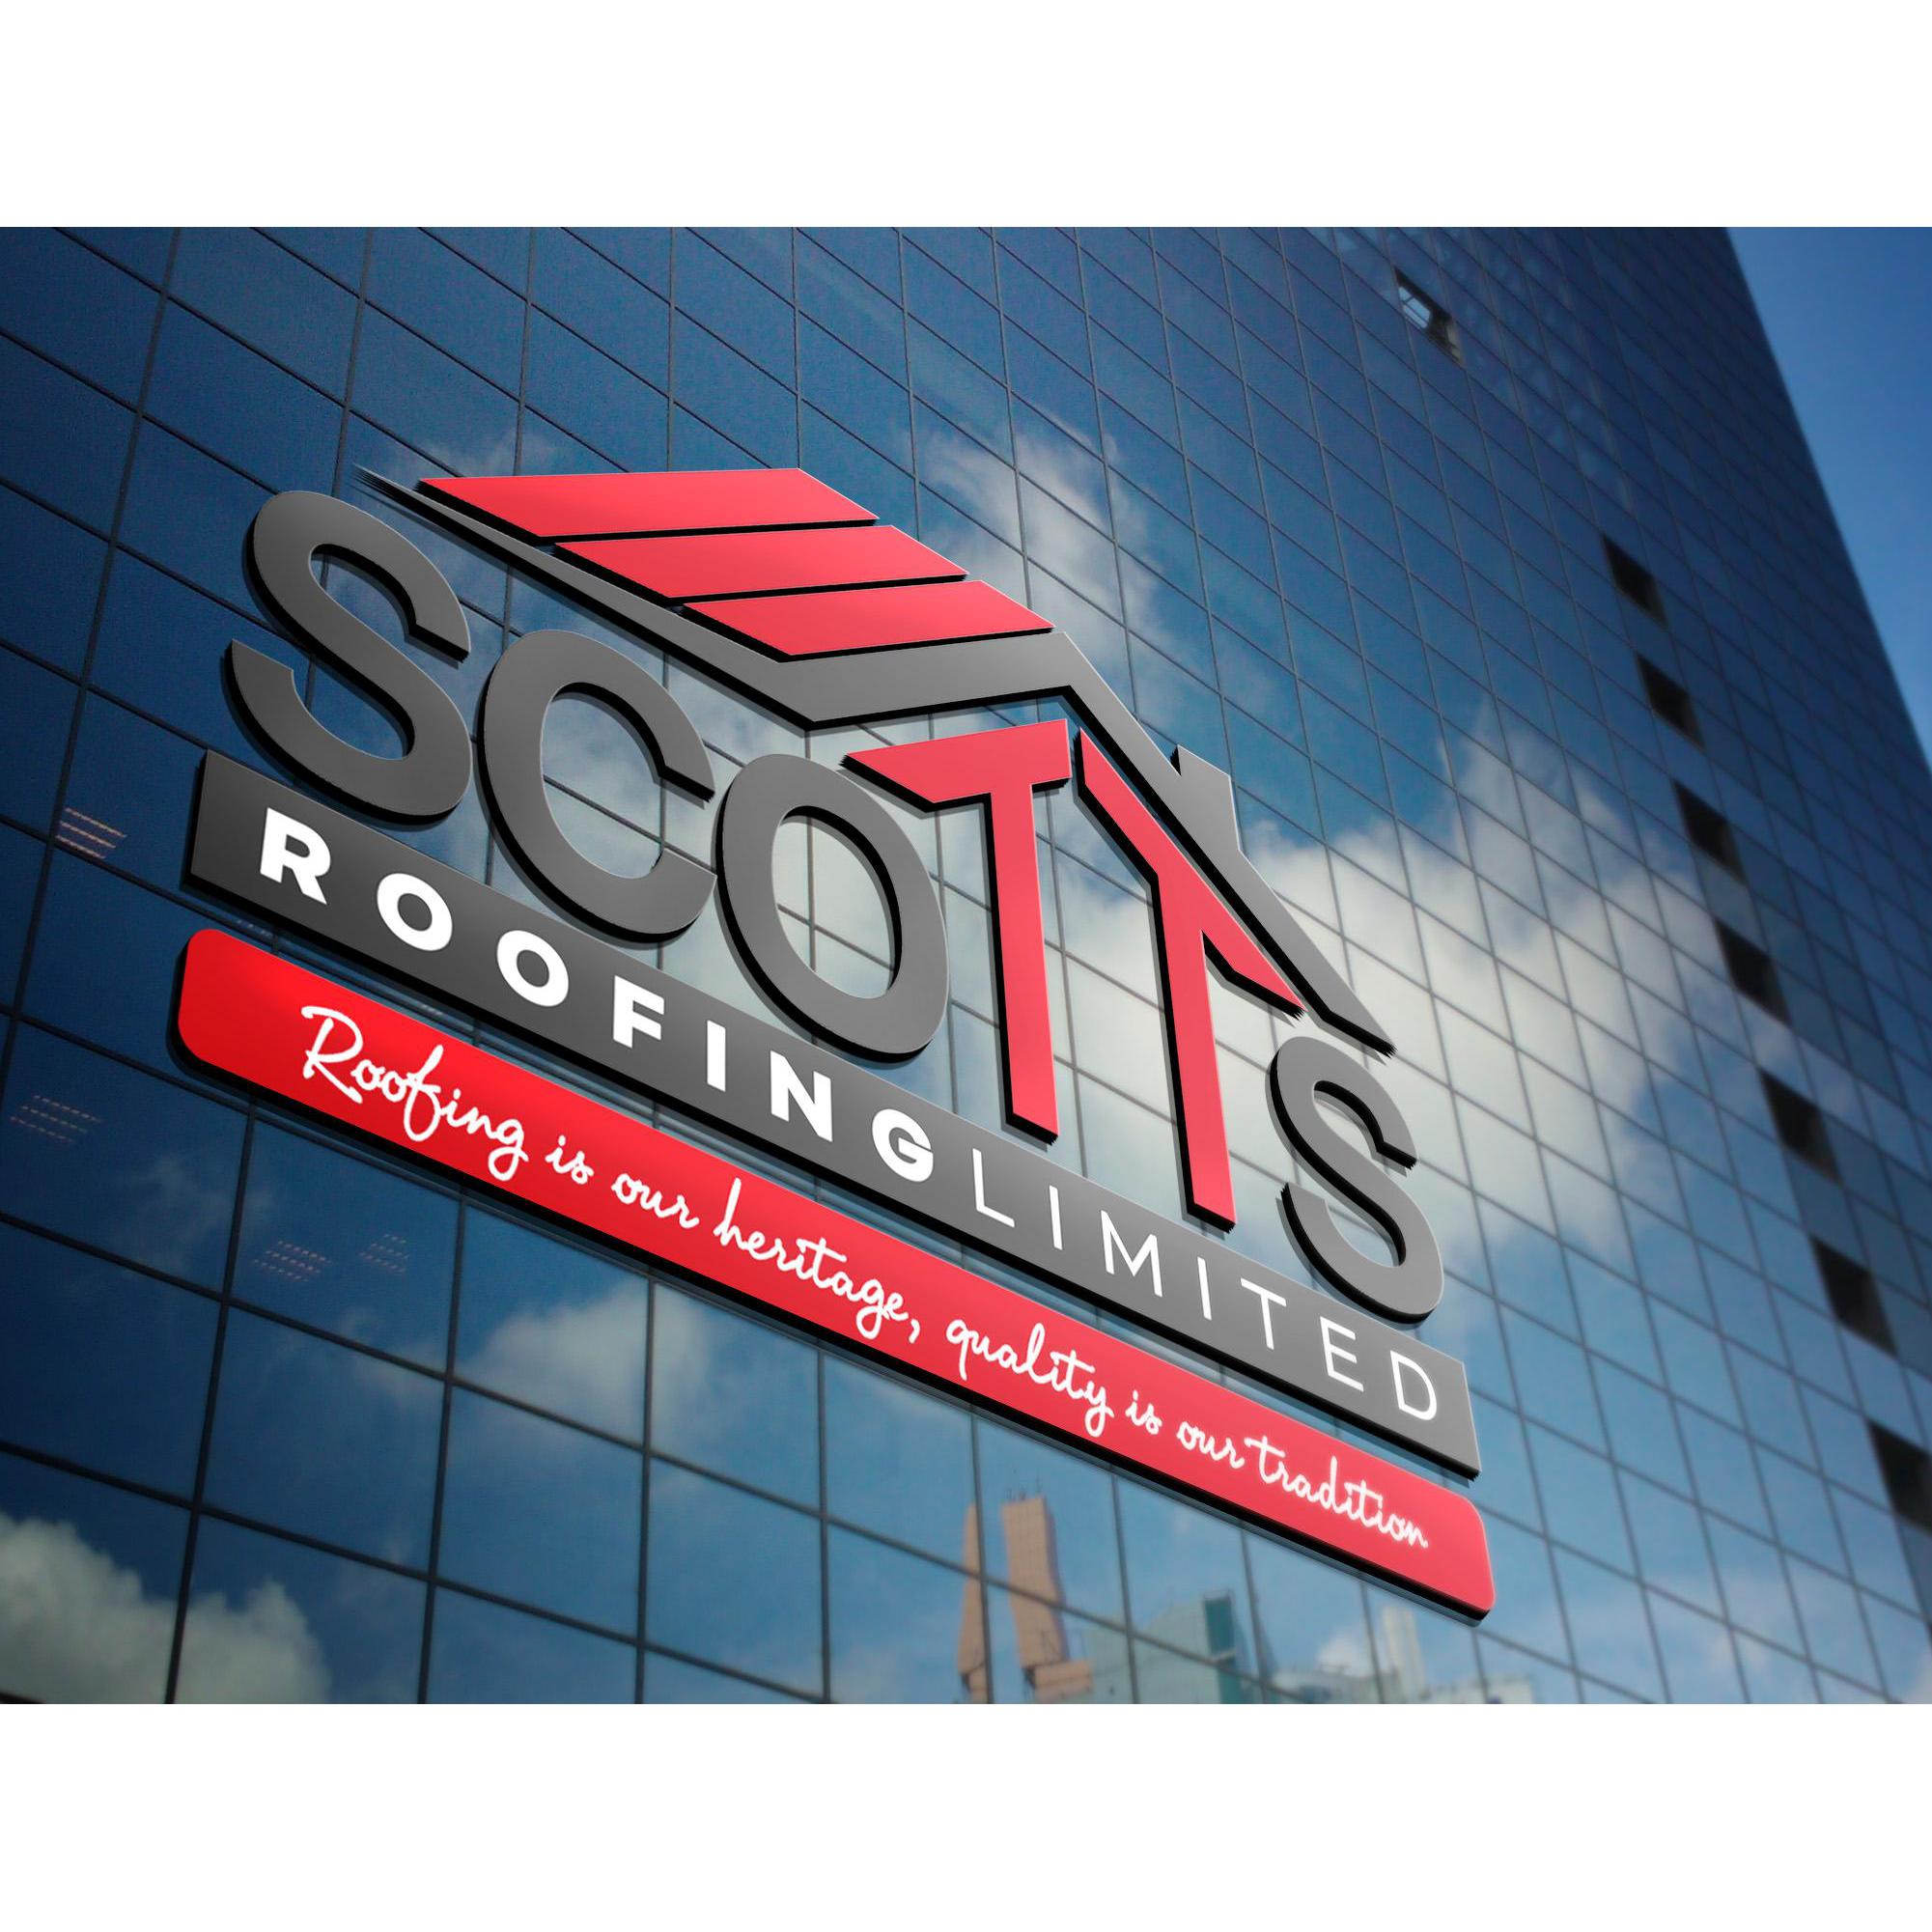 LOGO Scotts Roofing Ltd London 020 8144 9985